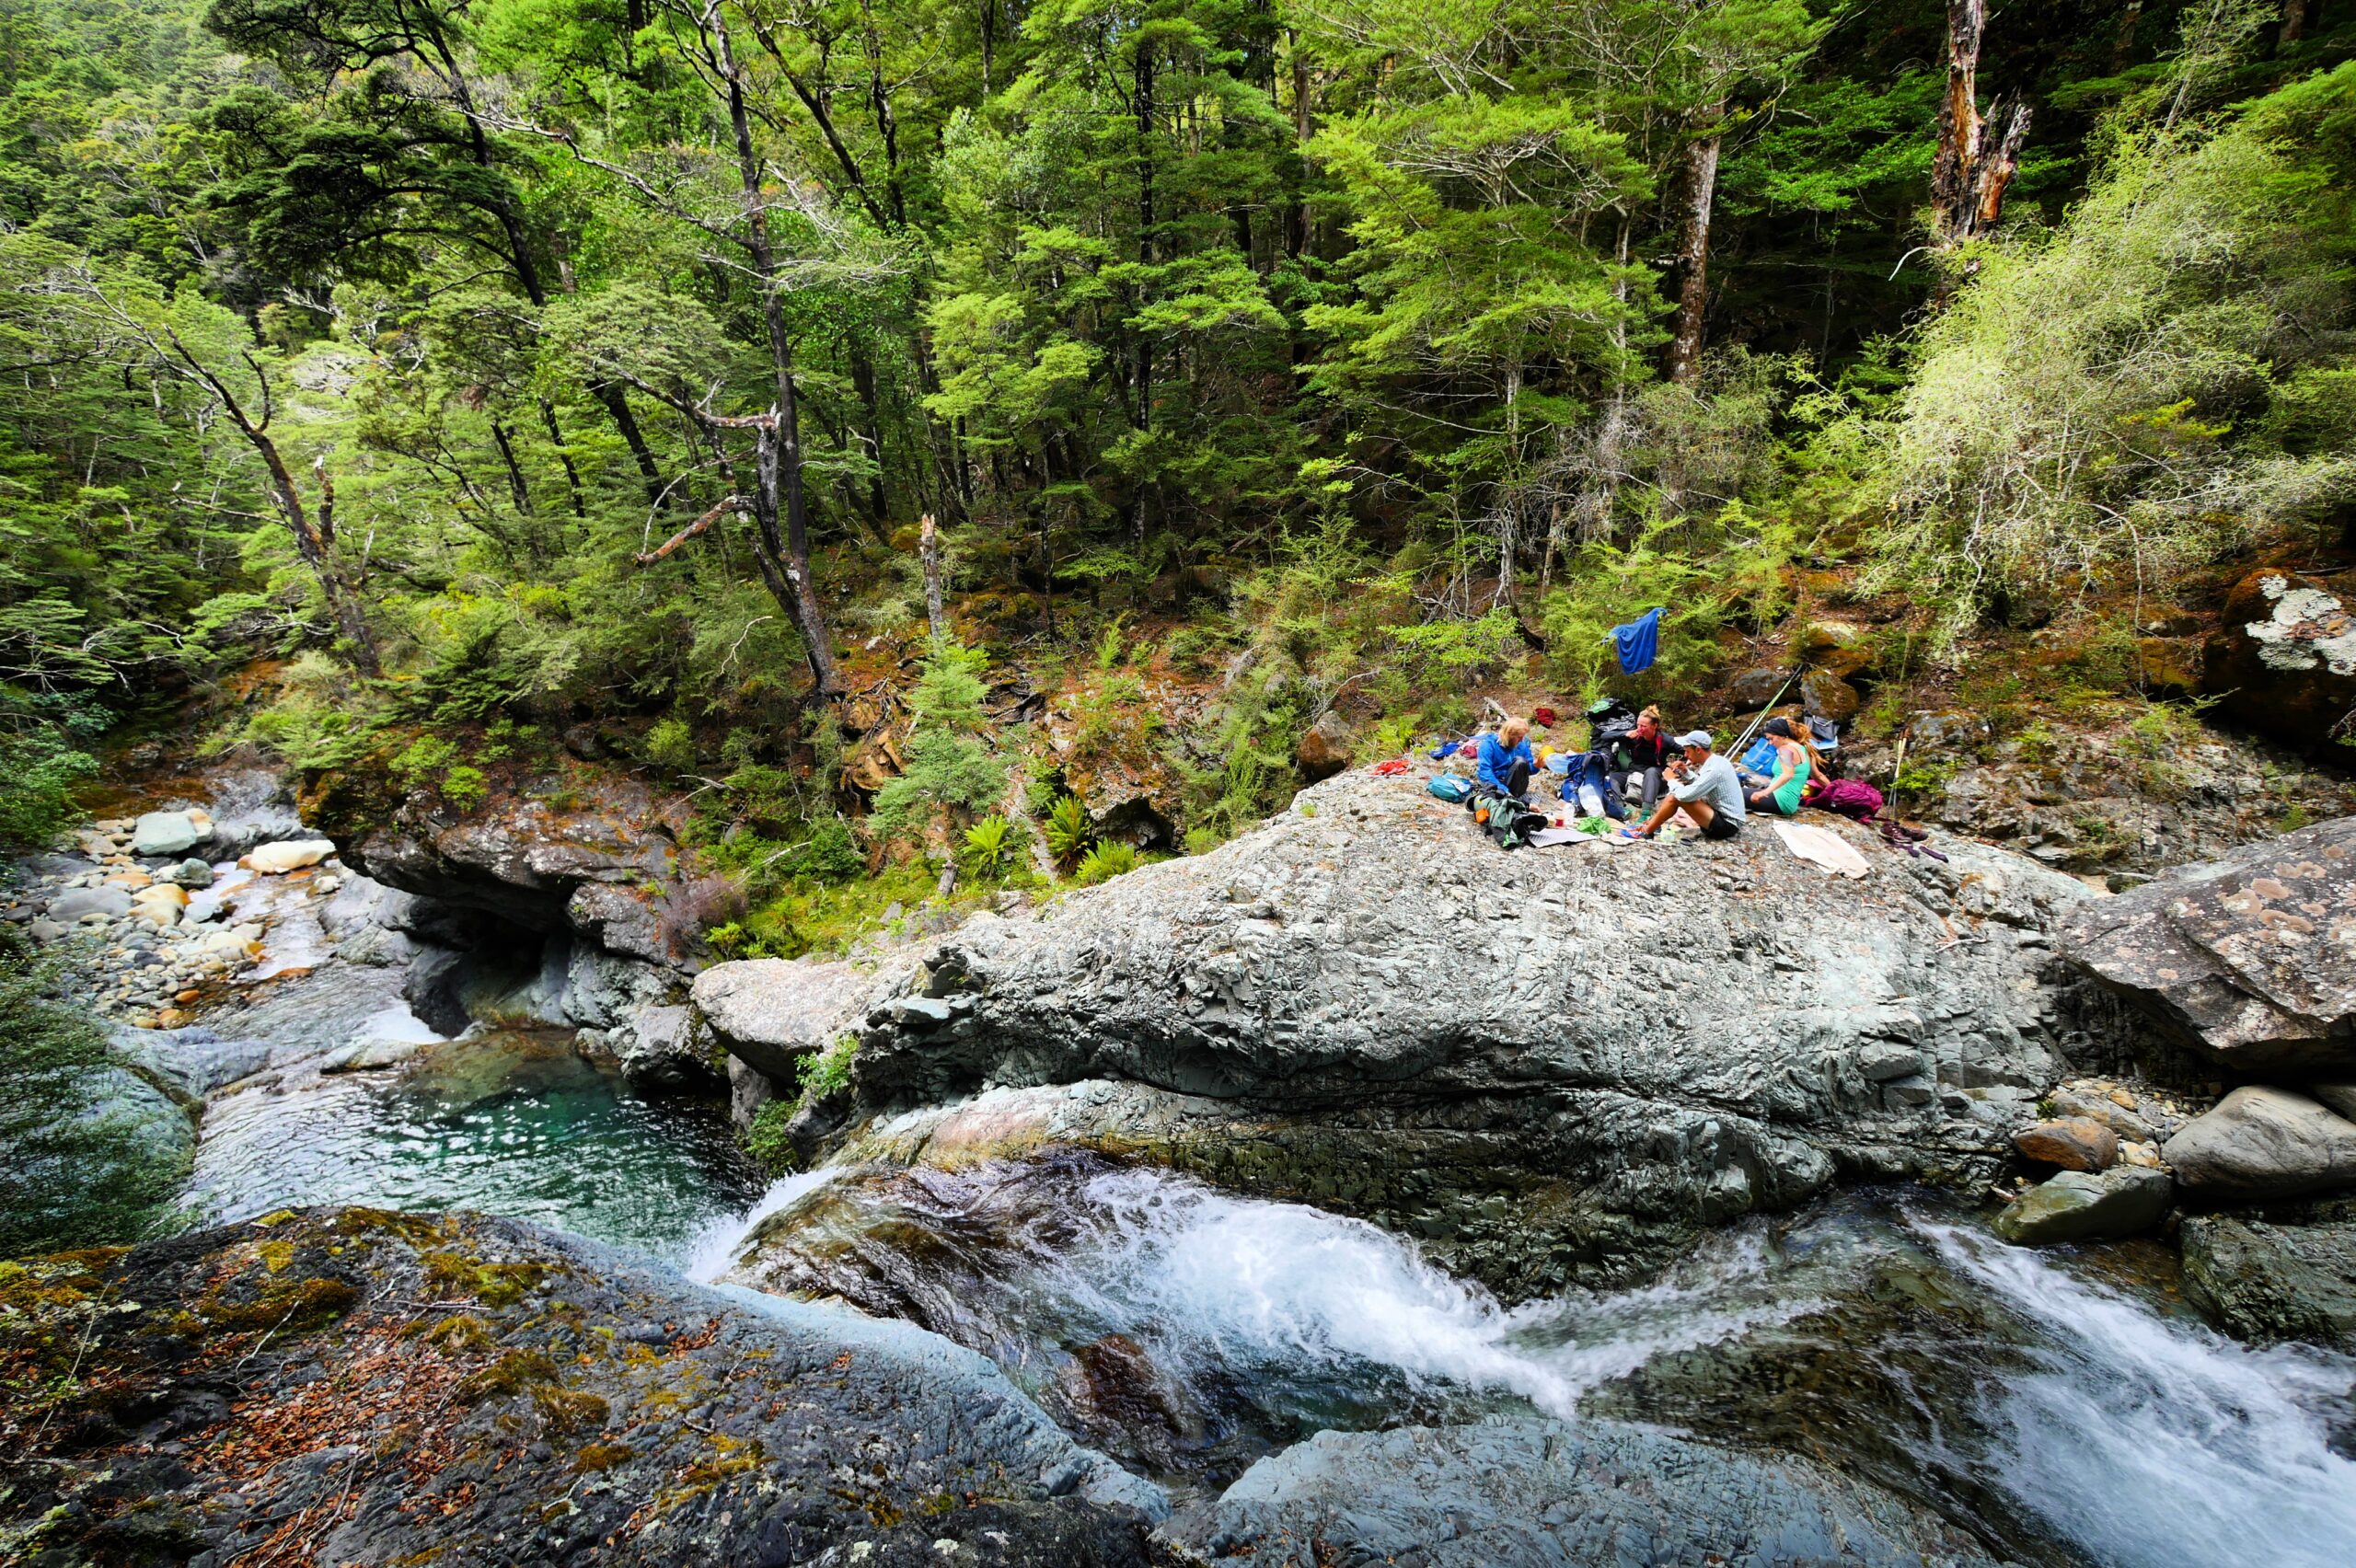 Te Araroa hikers eat lunch amongst waterfalls on the Pelorus River in New Zealand's Richmond Range.